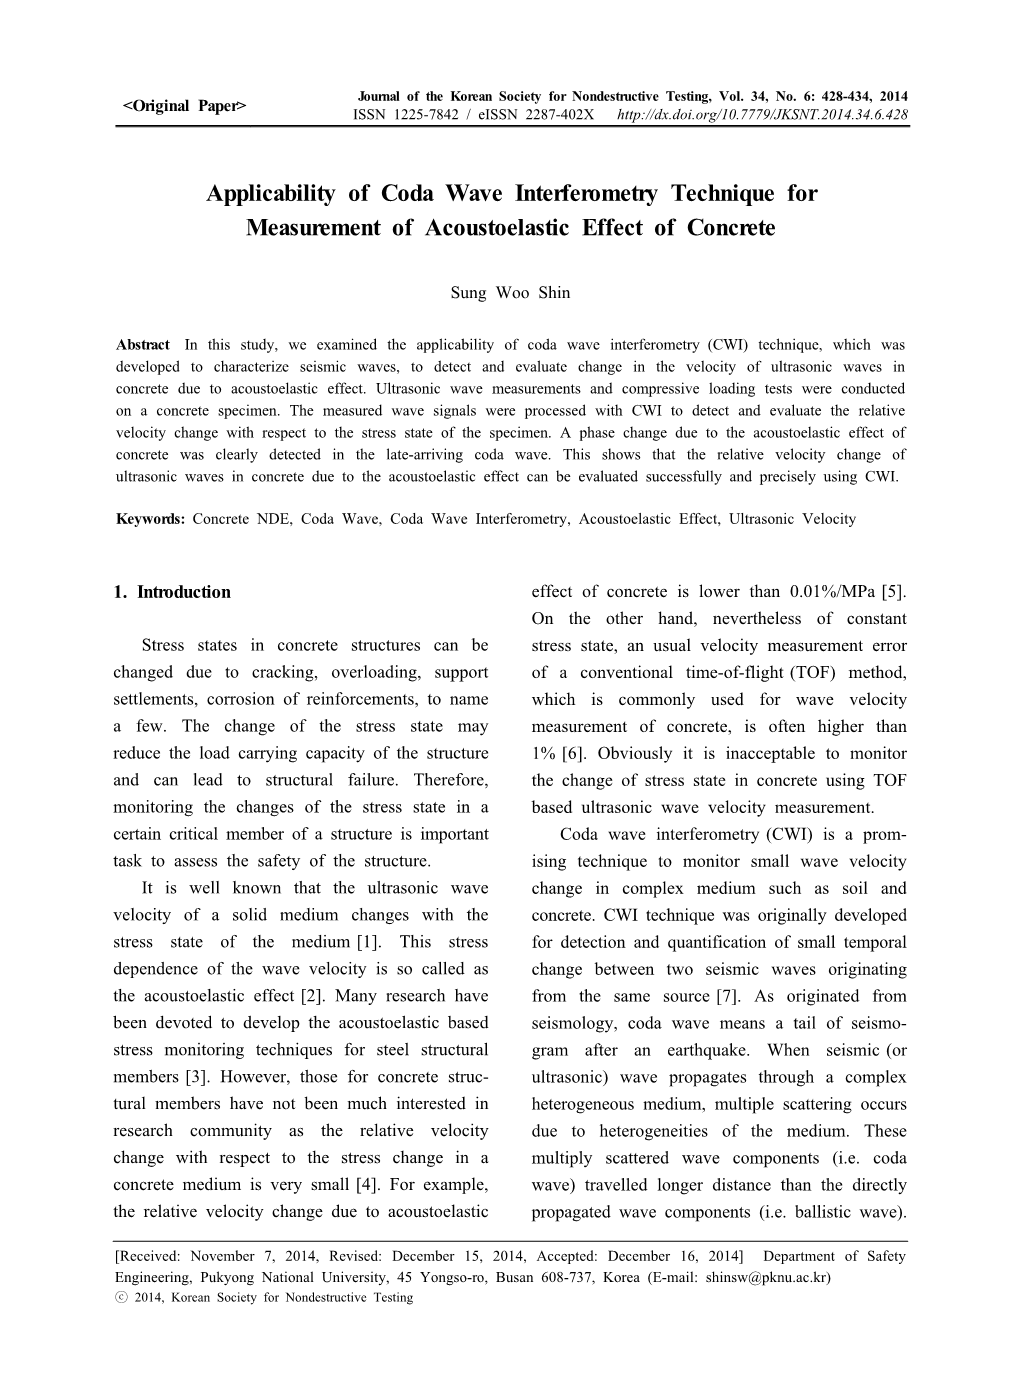 Applicability of Coda Wave Interferometry Technique for Measurement of Acoustoelastic Effect of Concrete